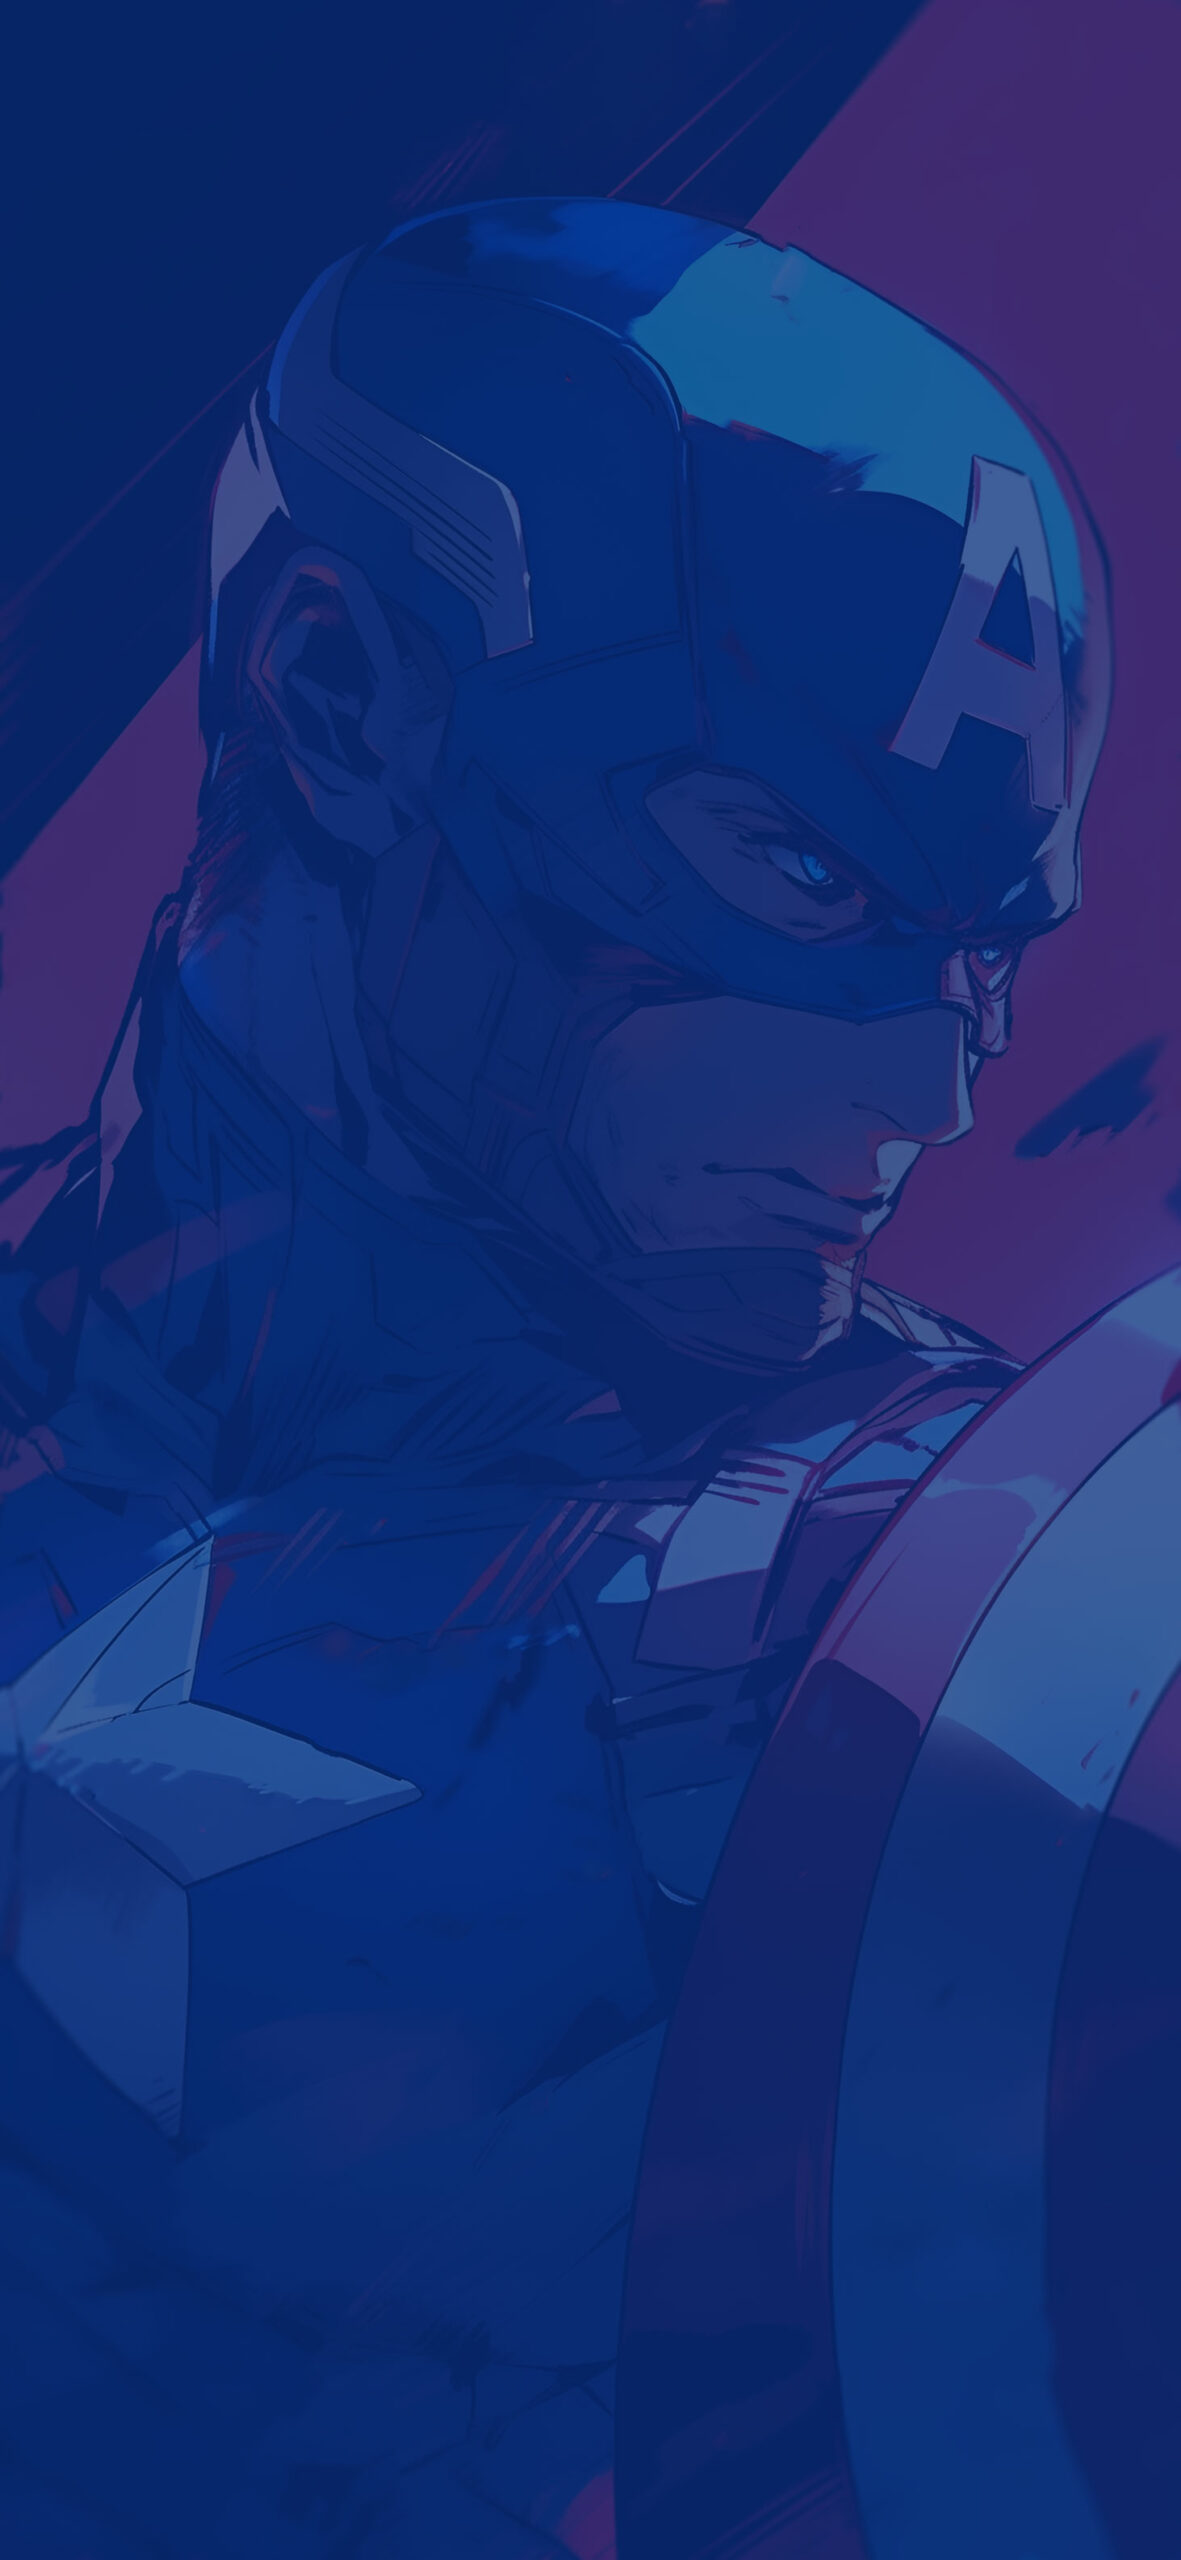 Marvel captain america anime style wallpaper Amazing marvel ar